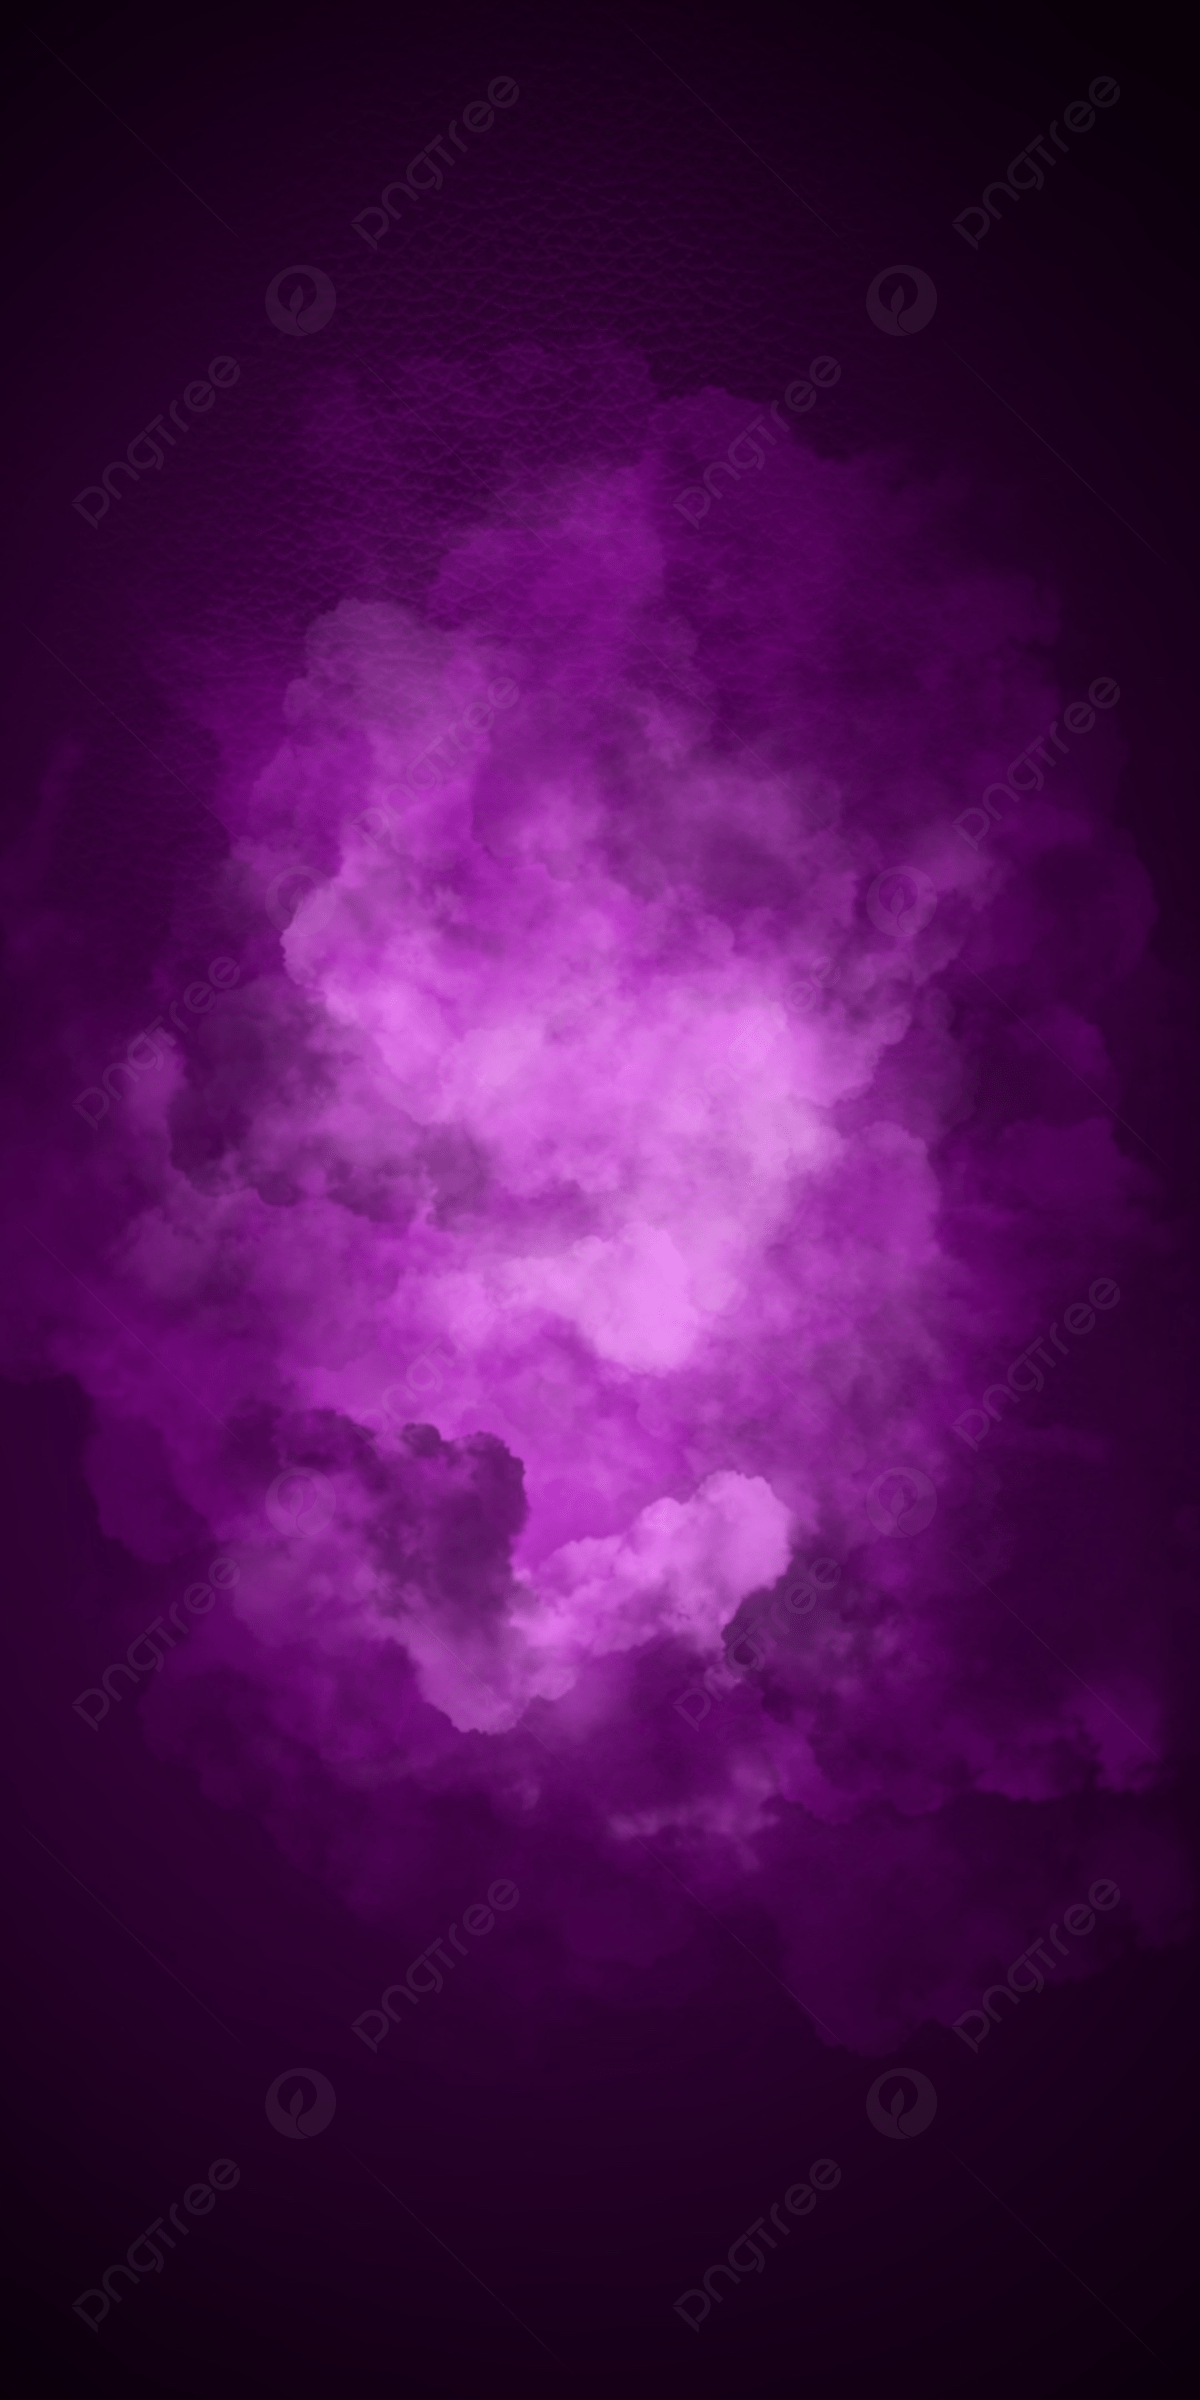 A purple smoke cloud on black background - Smoke